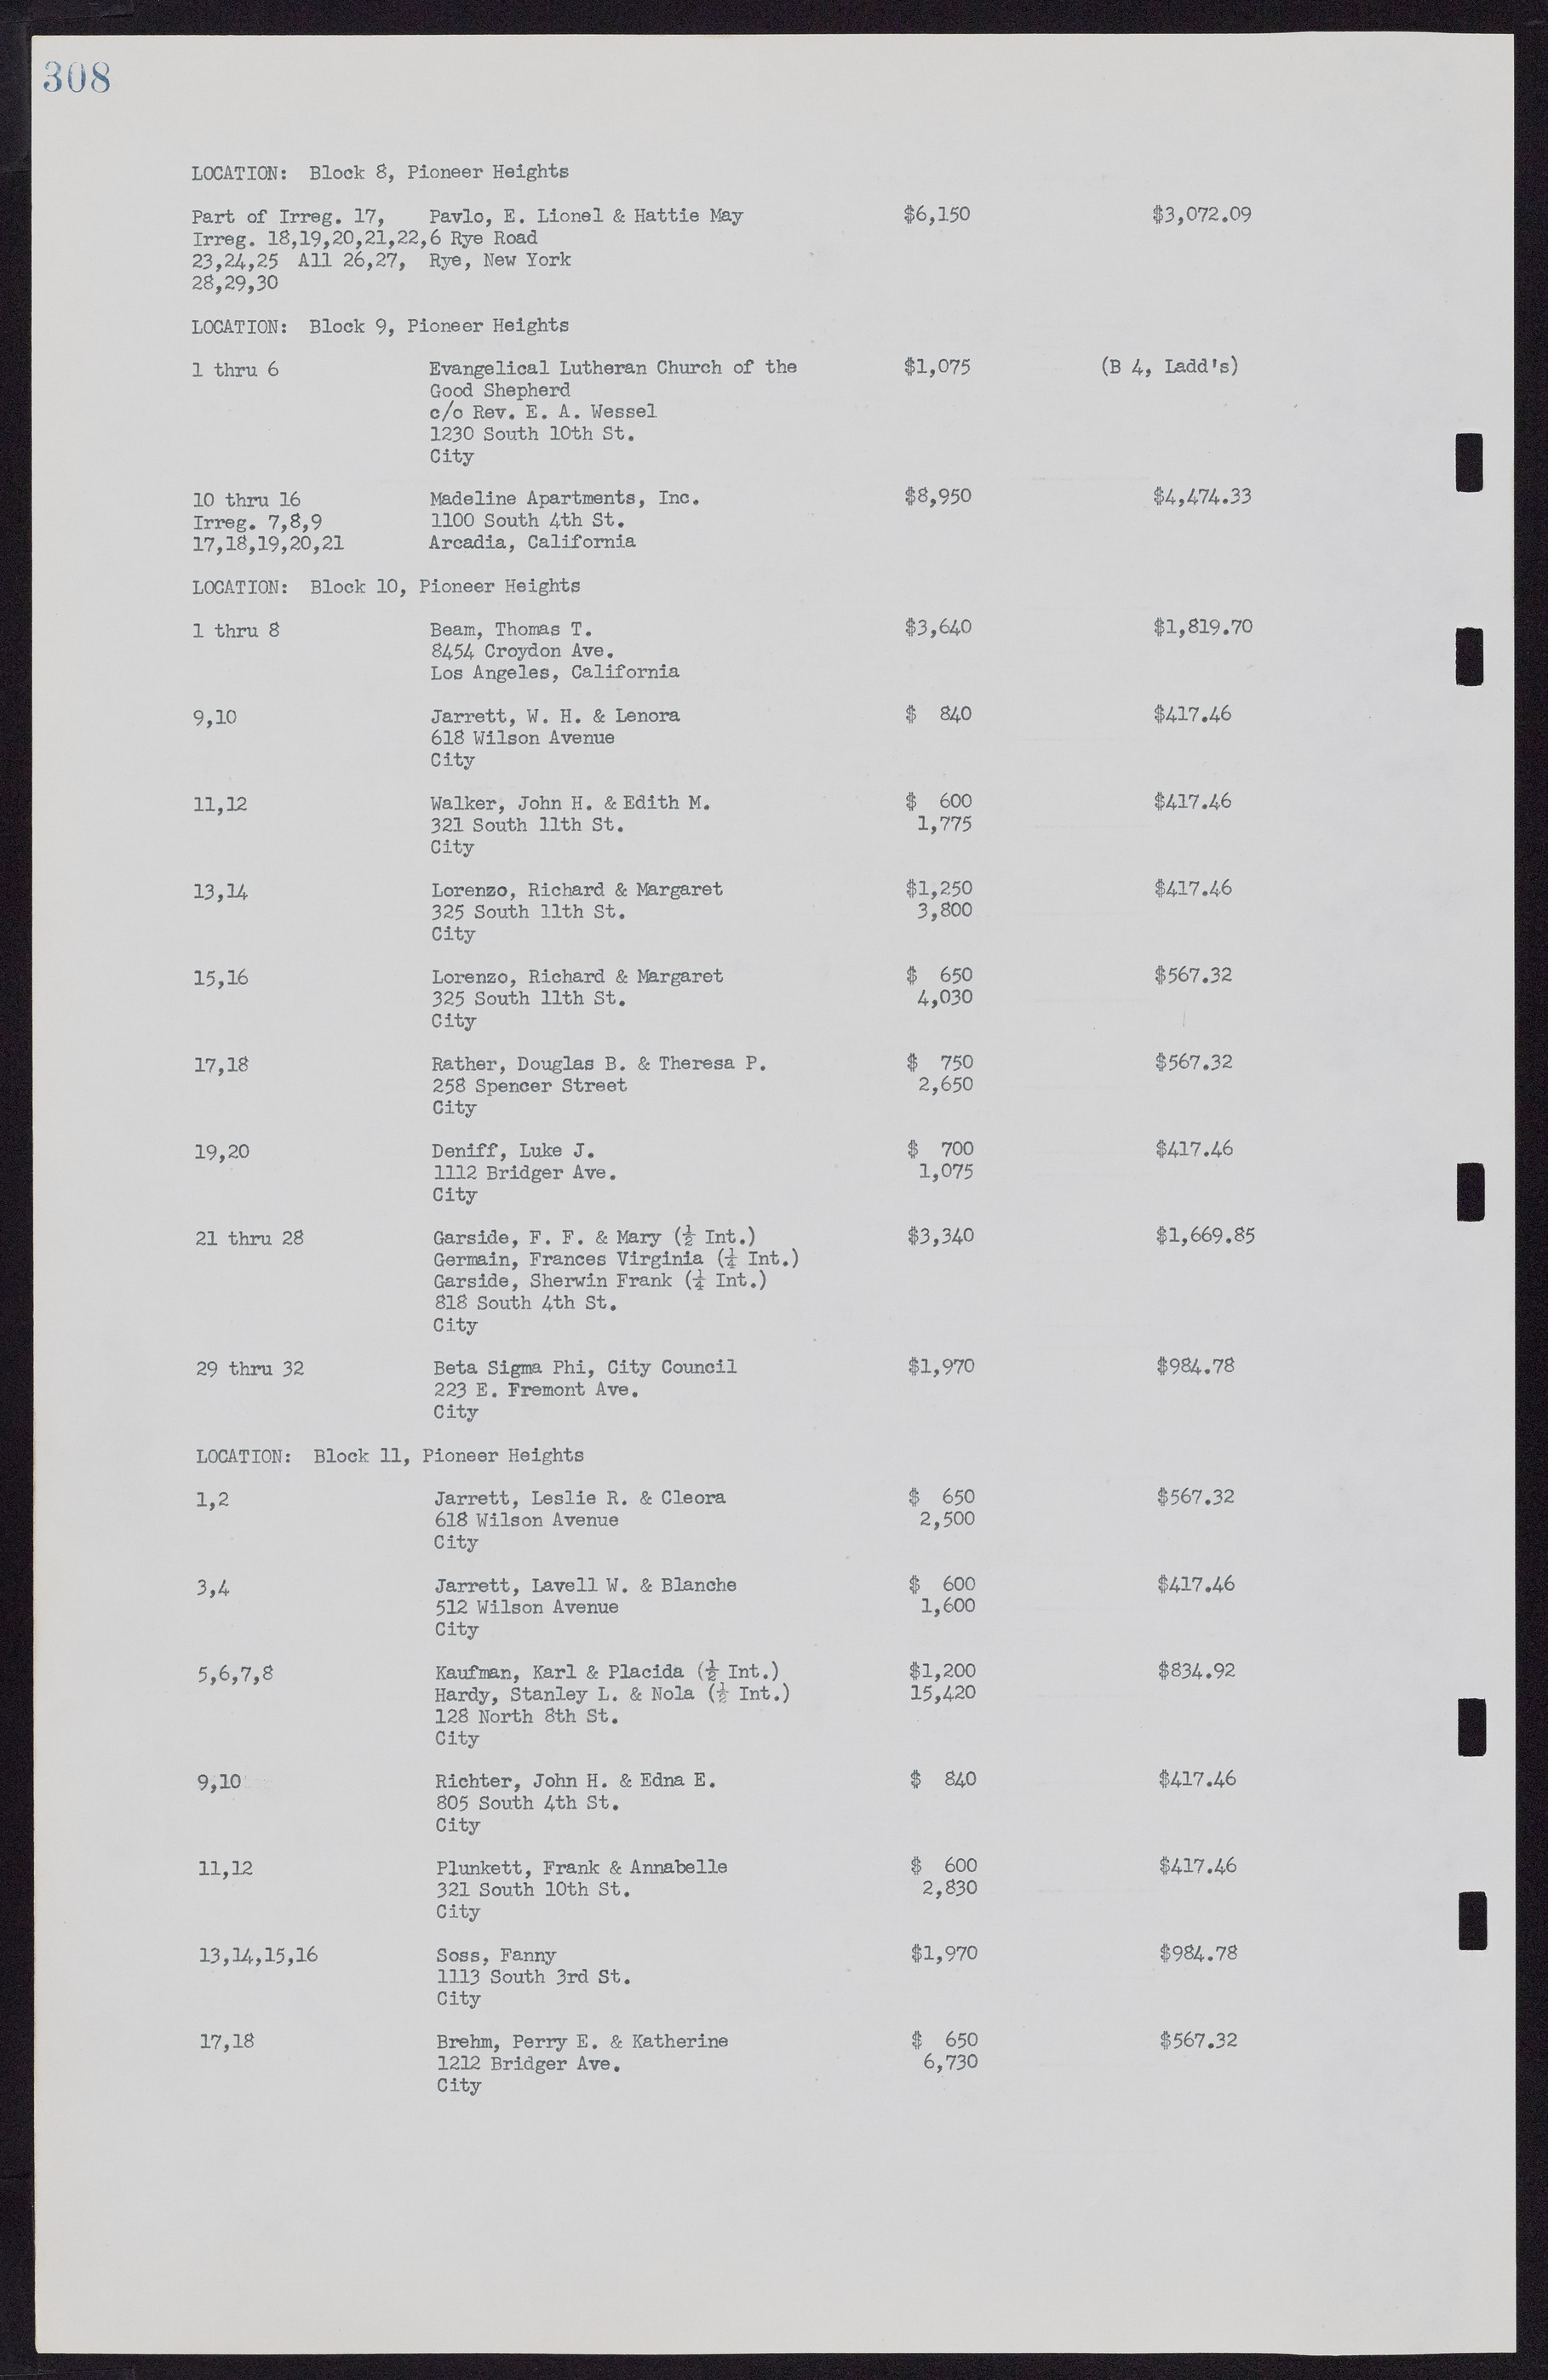 Las Vegas City Commission Minutes, November 7, 1949 to May 21, 1952, lvc000007-320